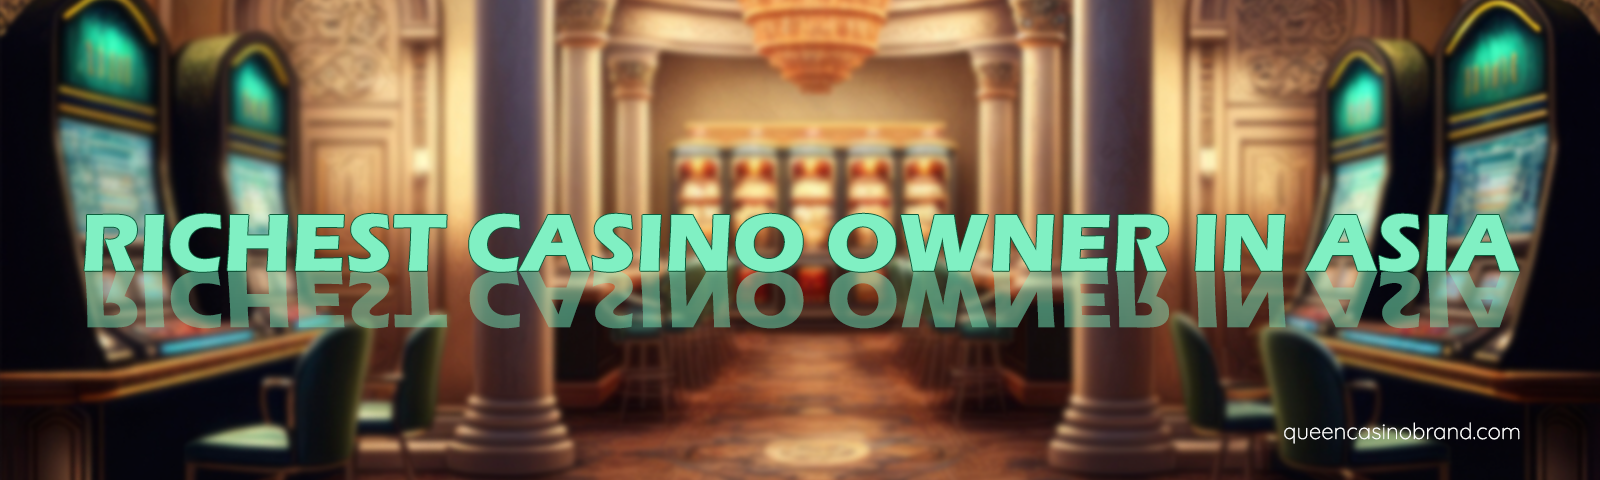 Richest Casino Owner in Asia